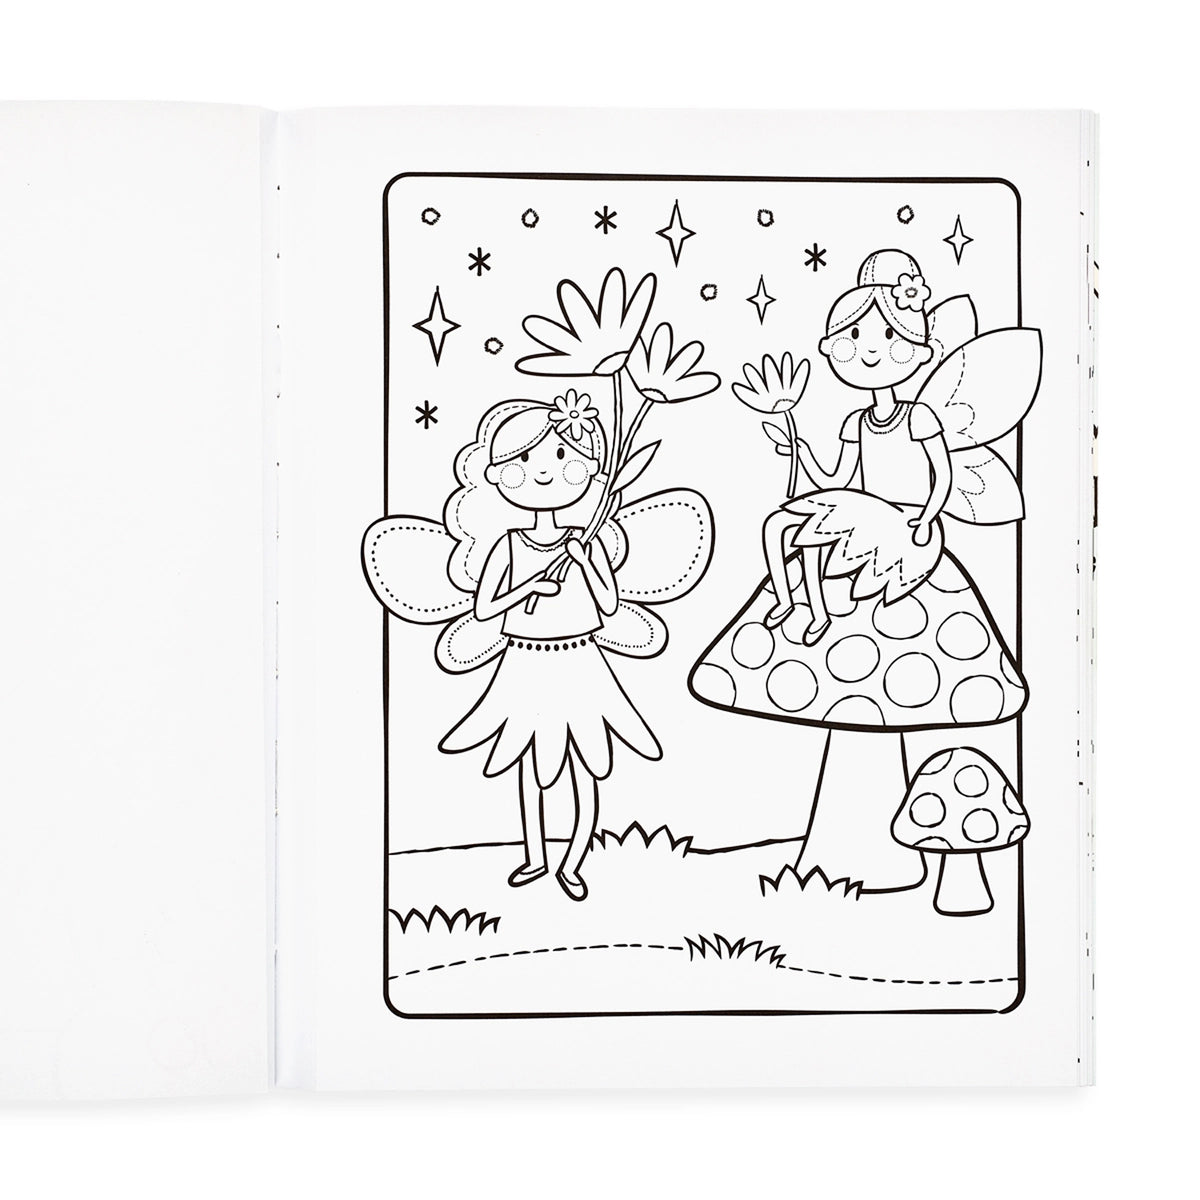 Color-in&#39; Book - Princesses &amp; Fairies